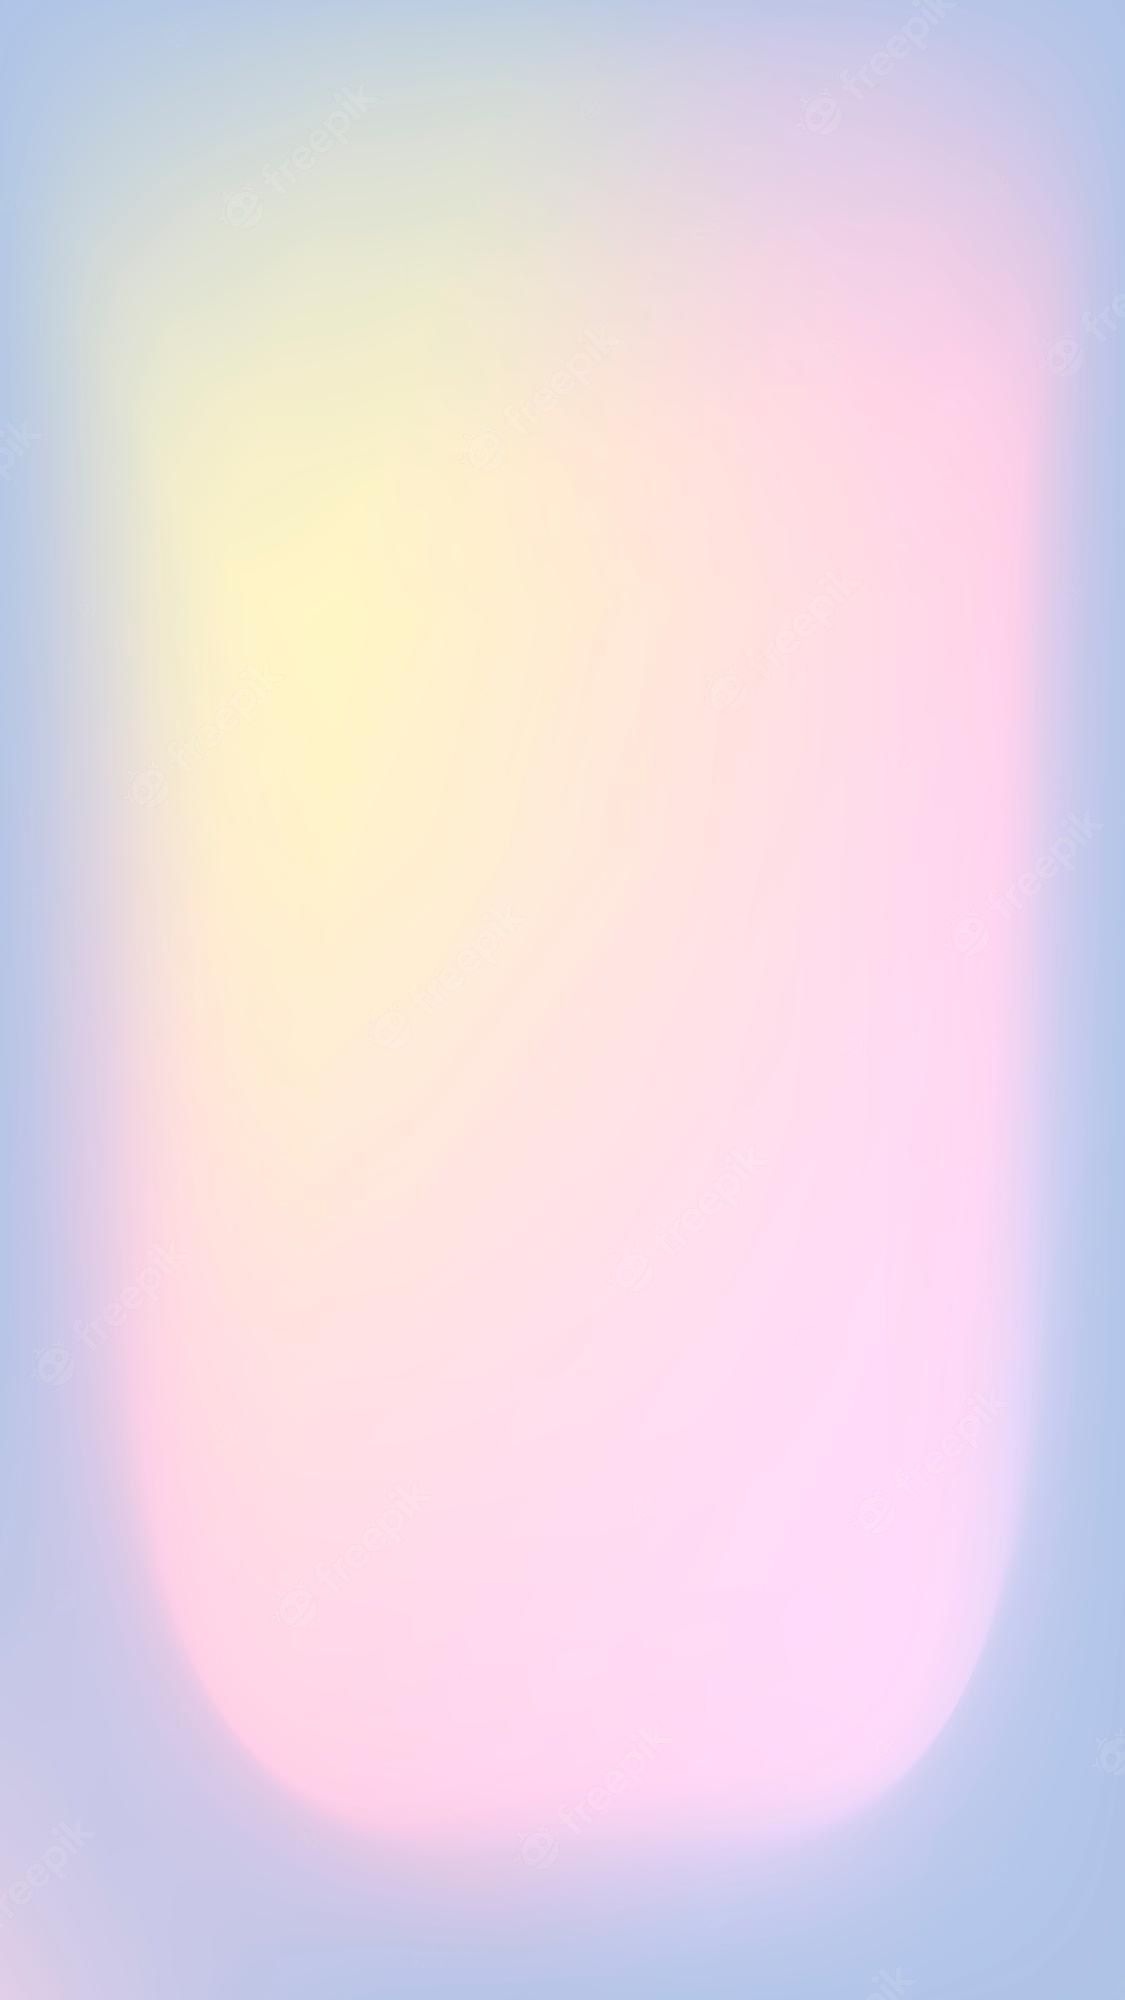 Free Vector. Gradient blur soft pink pastel phone wallpaper vector